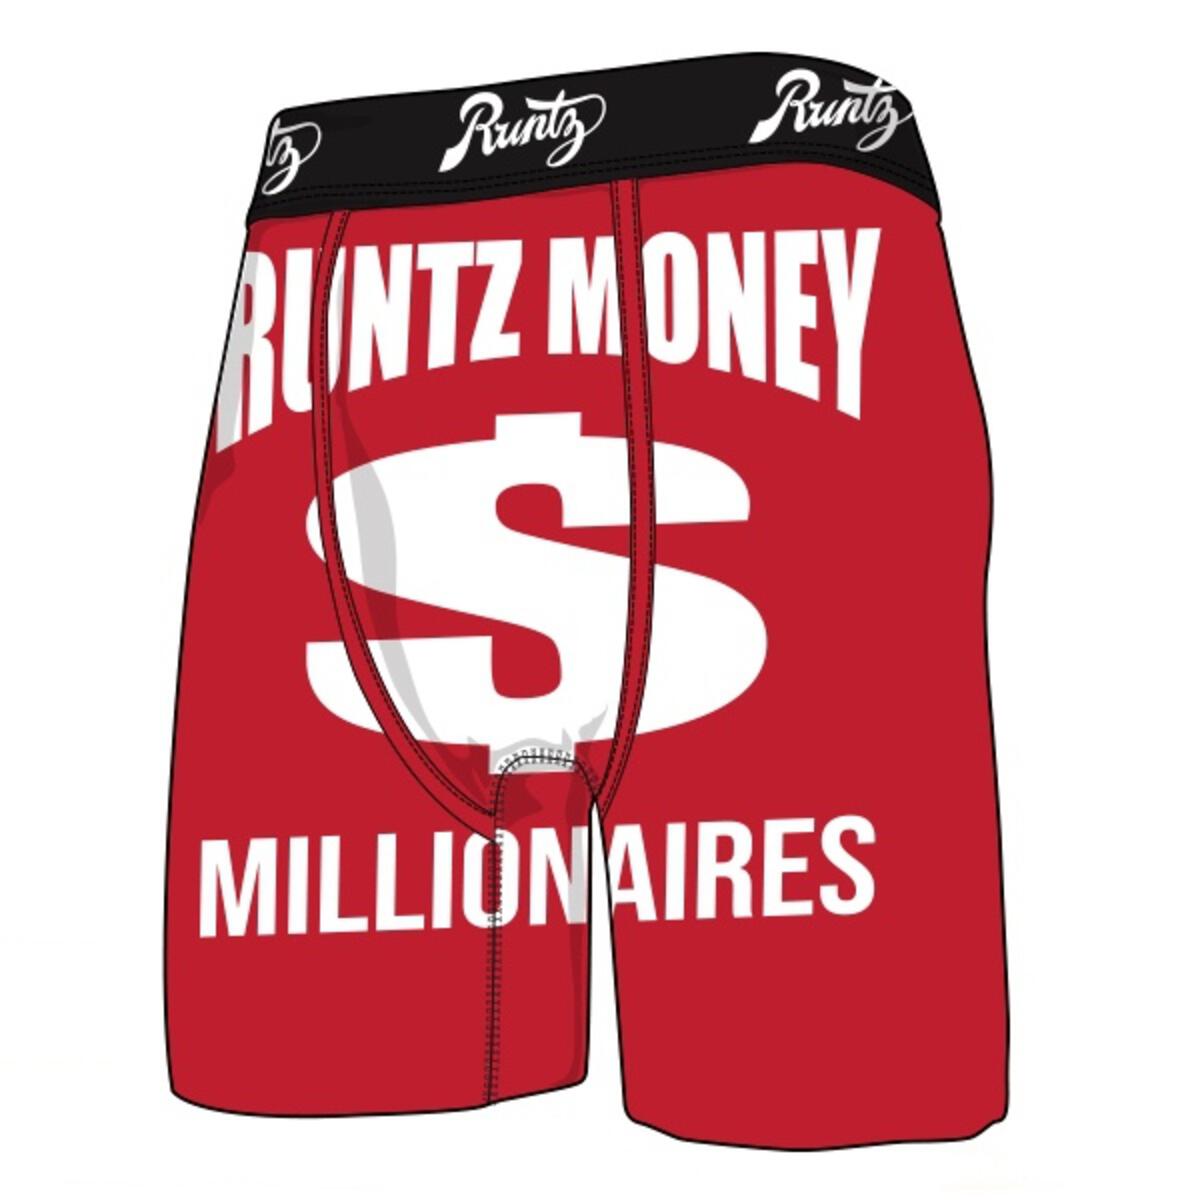 Runtz-Runtz Money Underwear